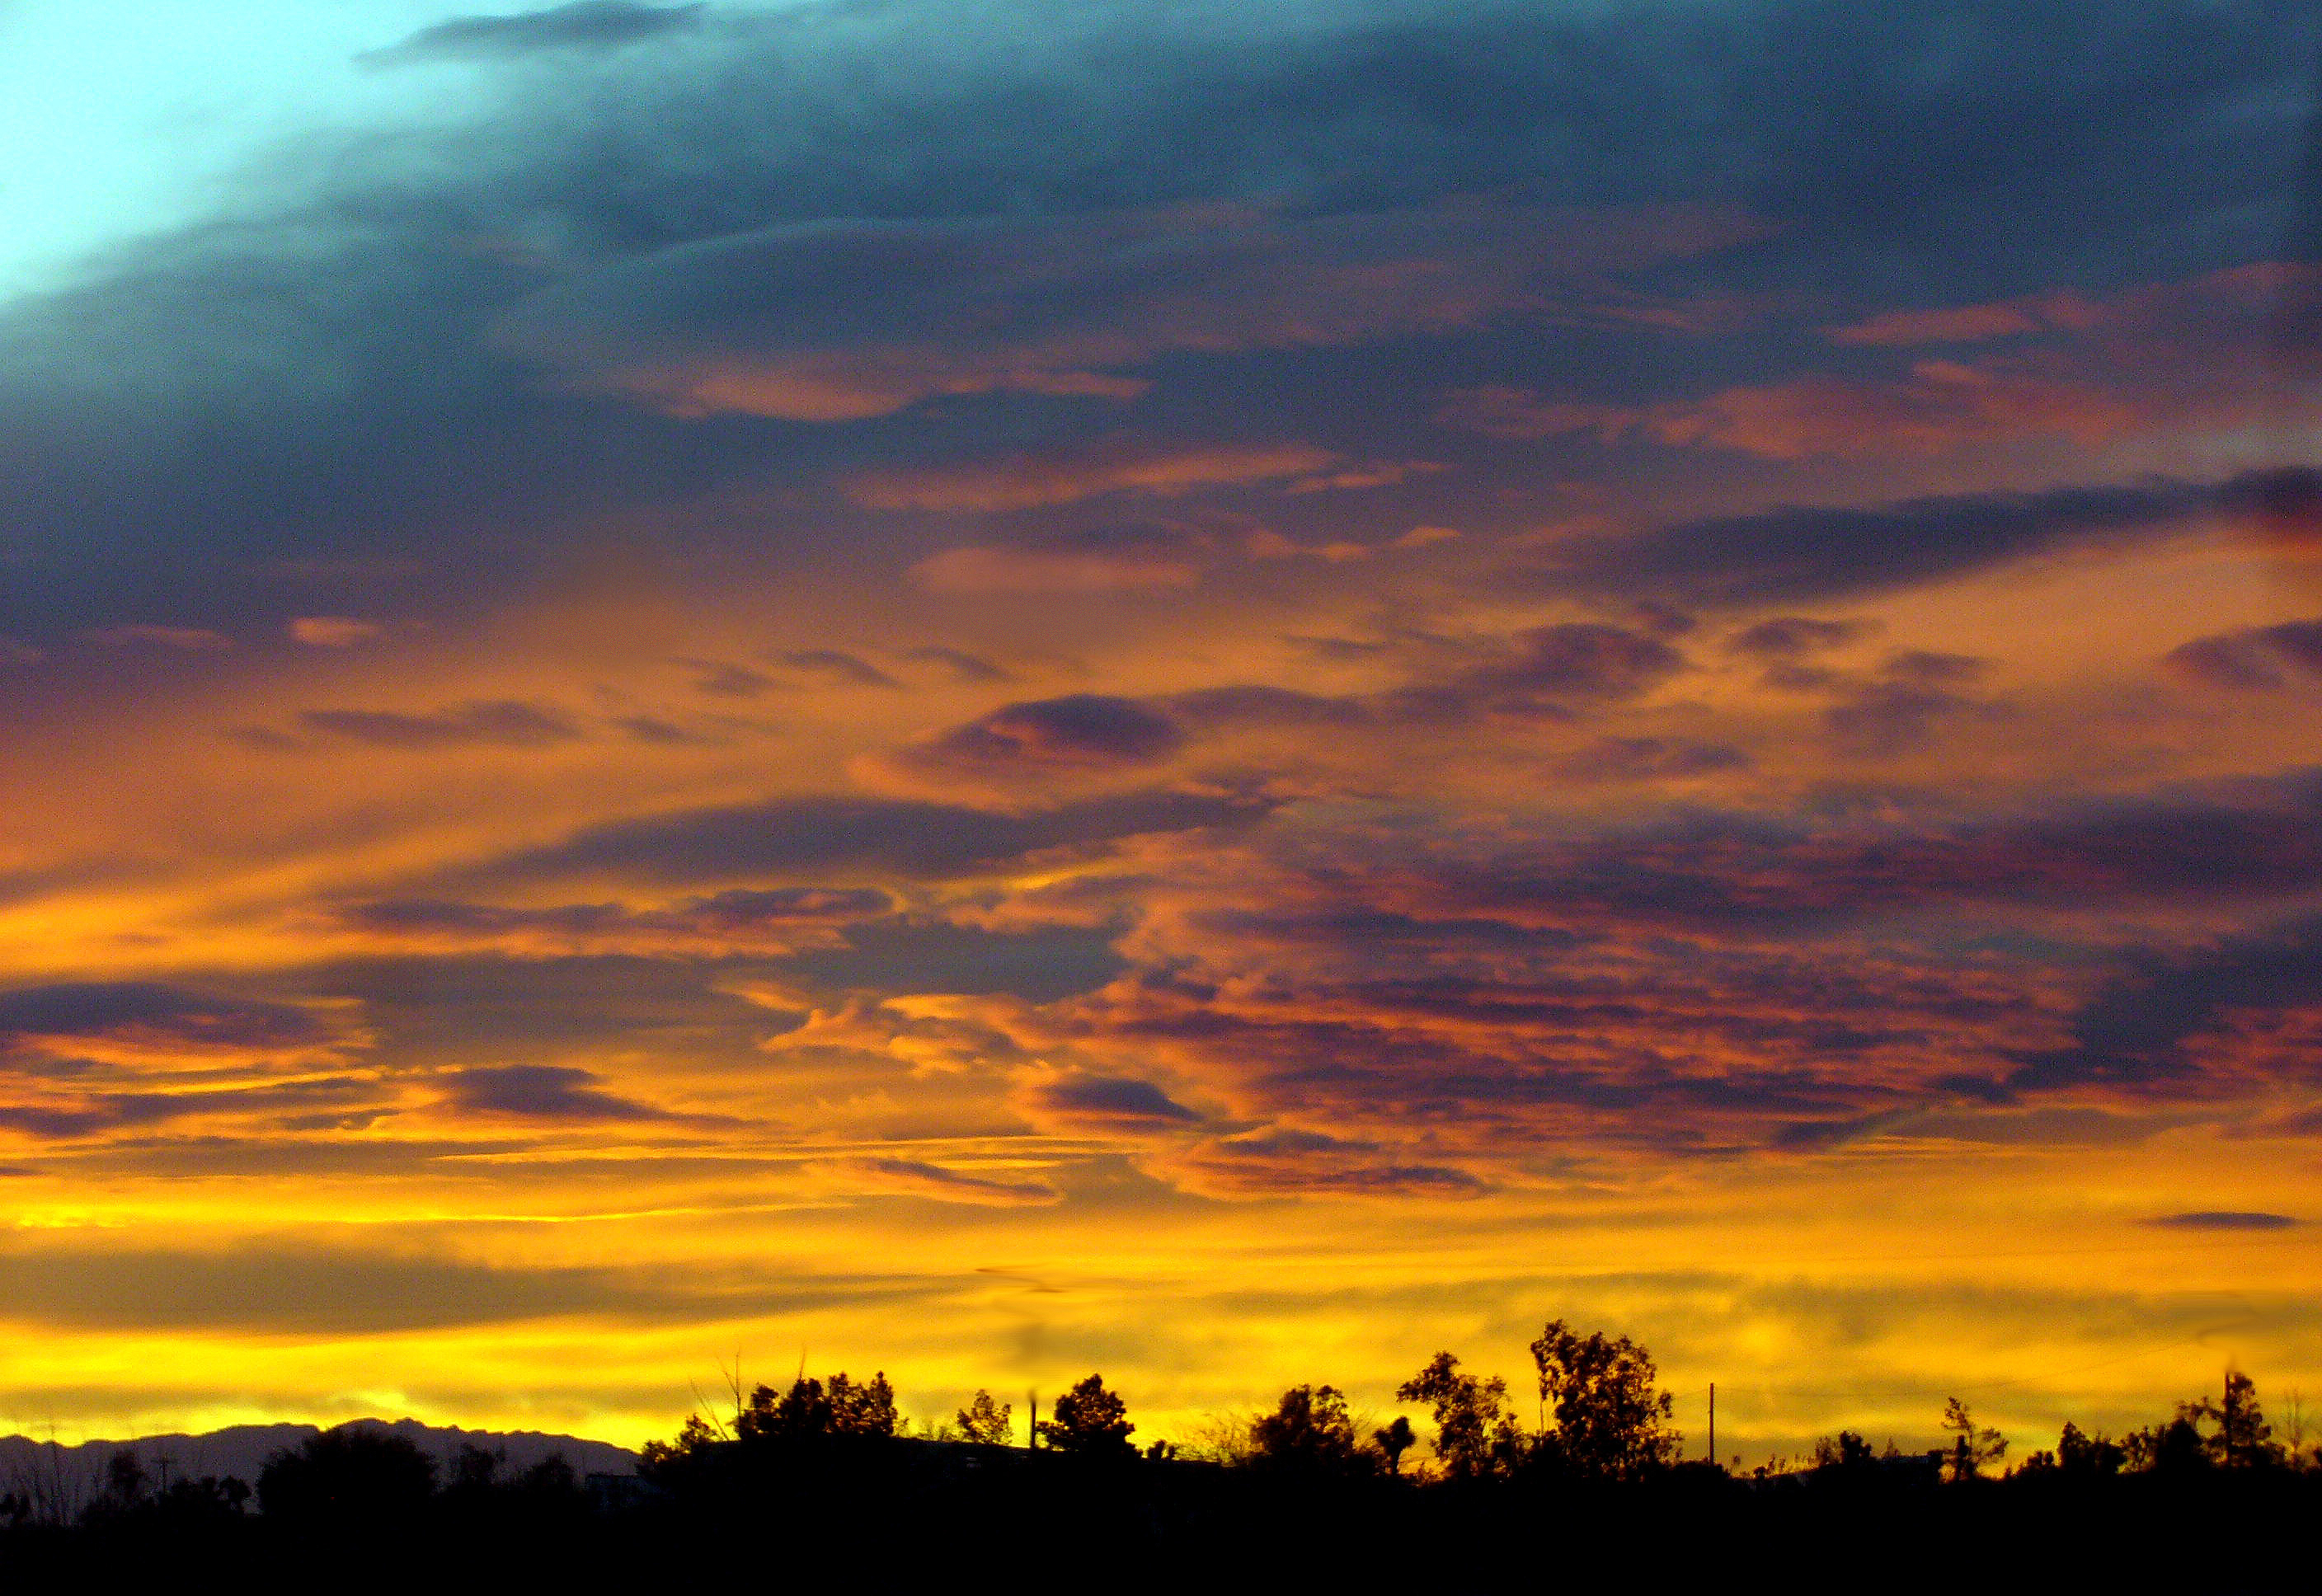 File:Just Moments Before Sunrise.jpg - Wikimedia Commons